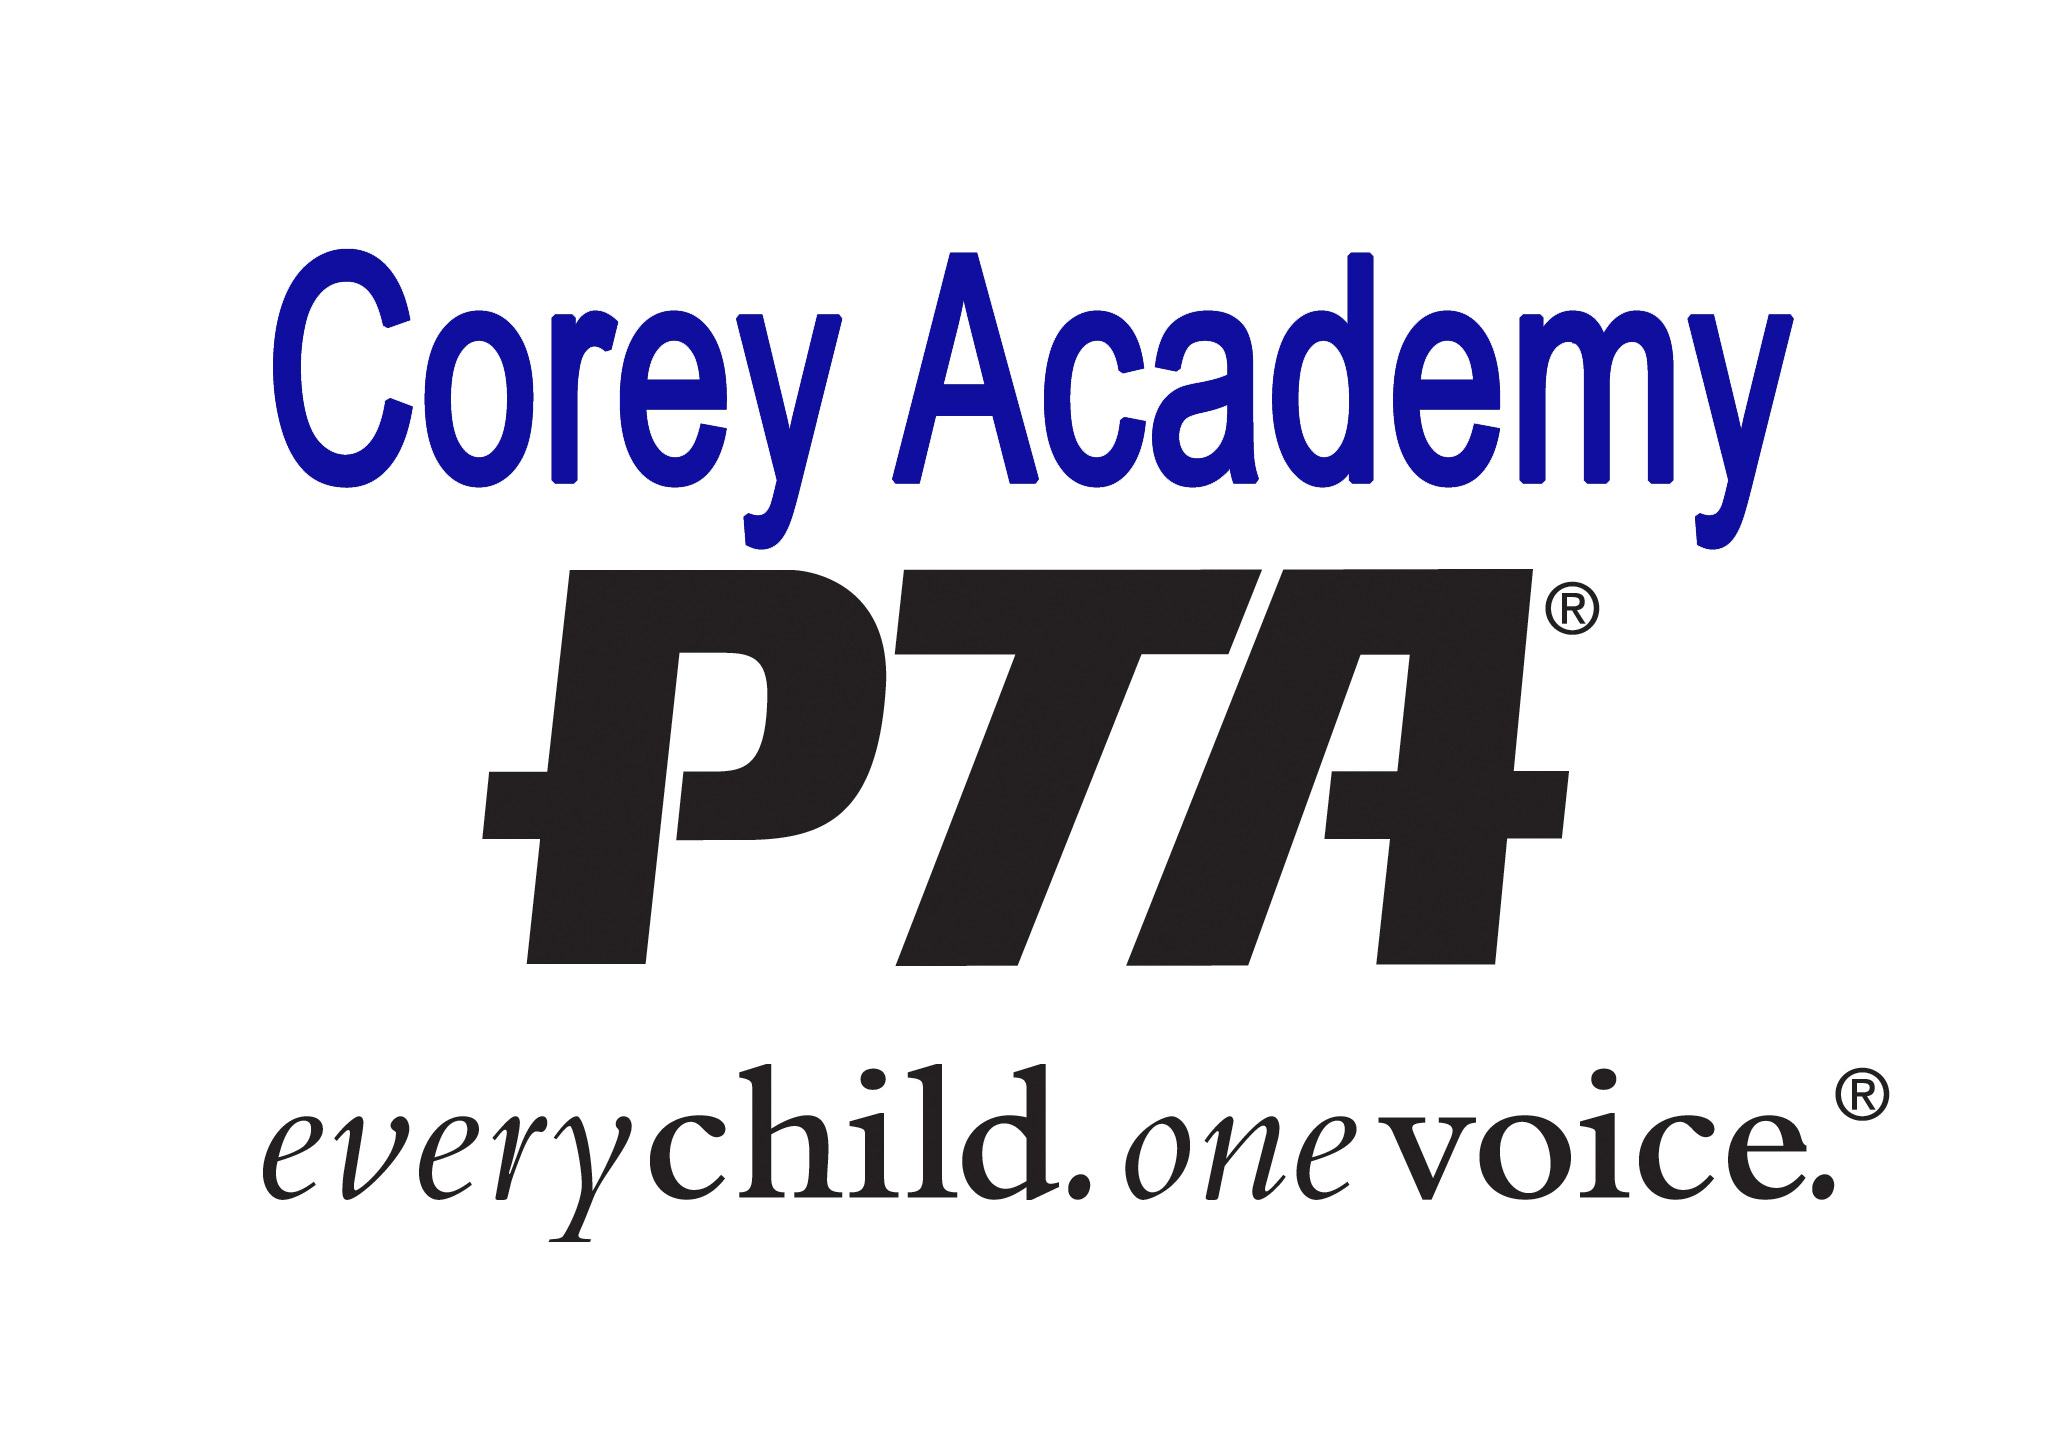 Corey Academy PTA